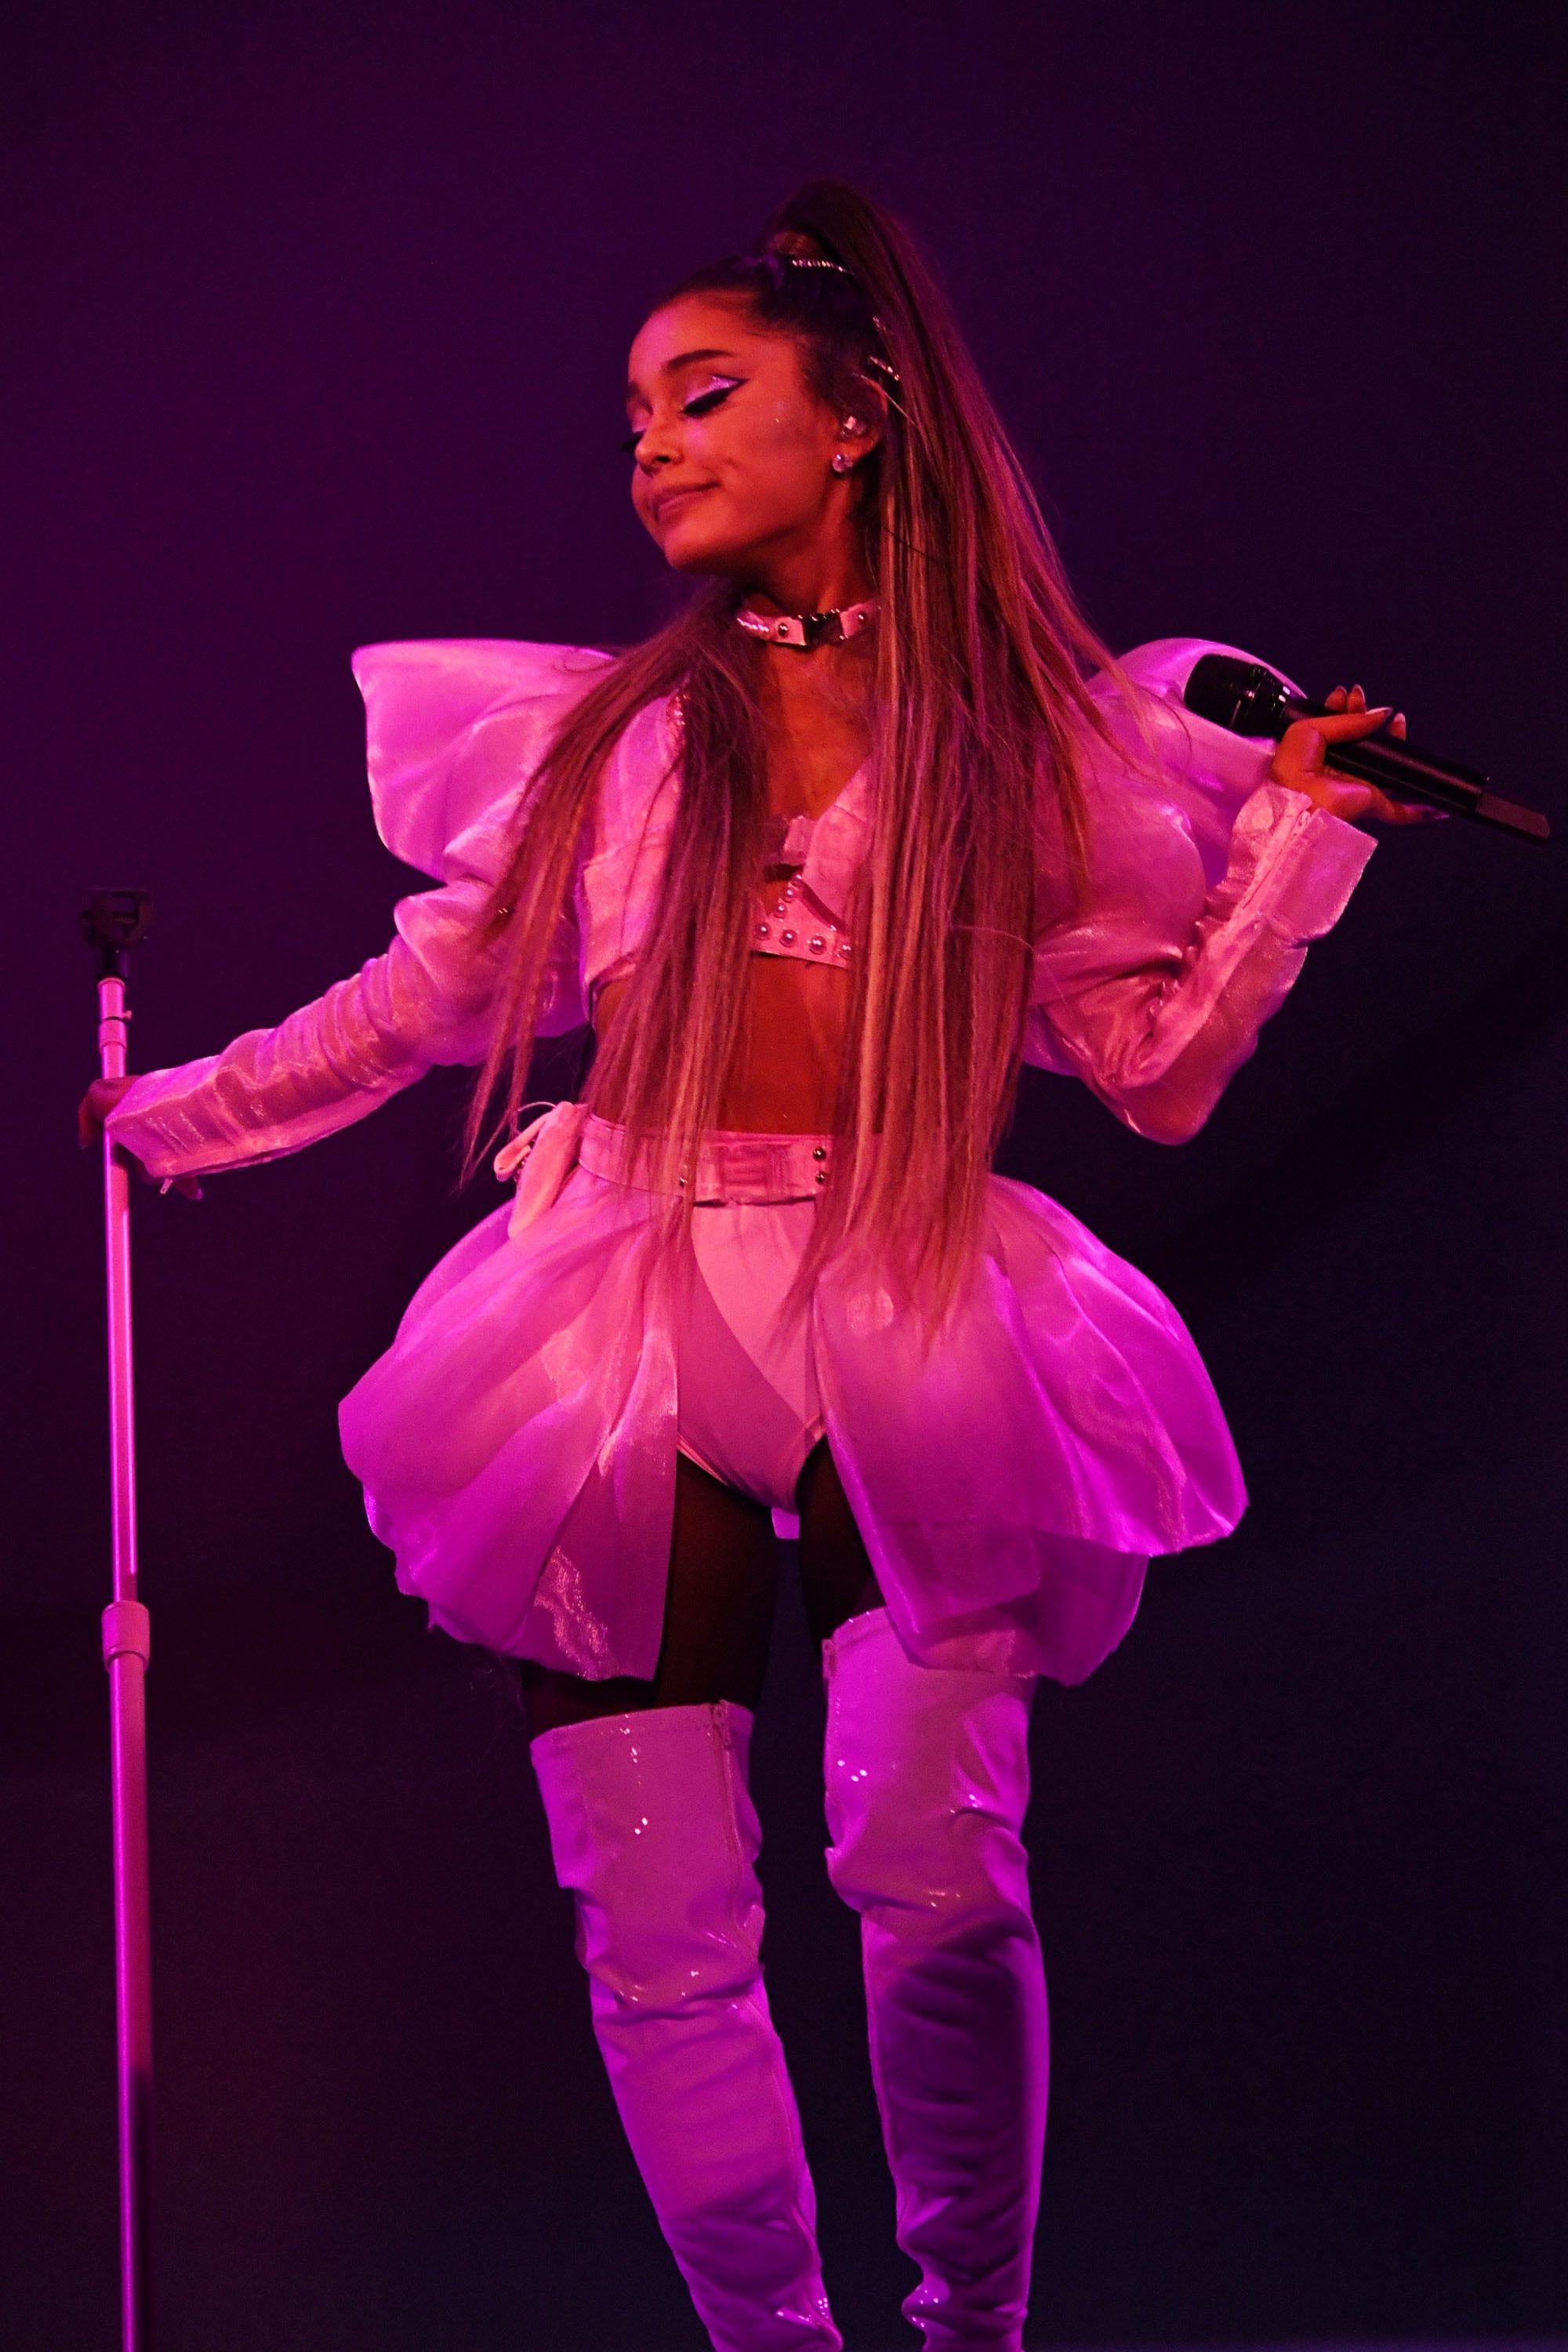 Ariana Grande Concert Wallpapers - Top Free Ariana Grande Concert ...